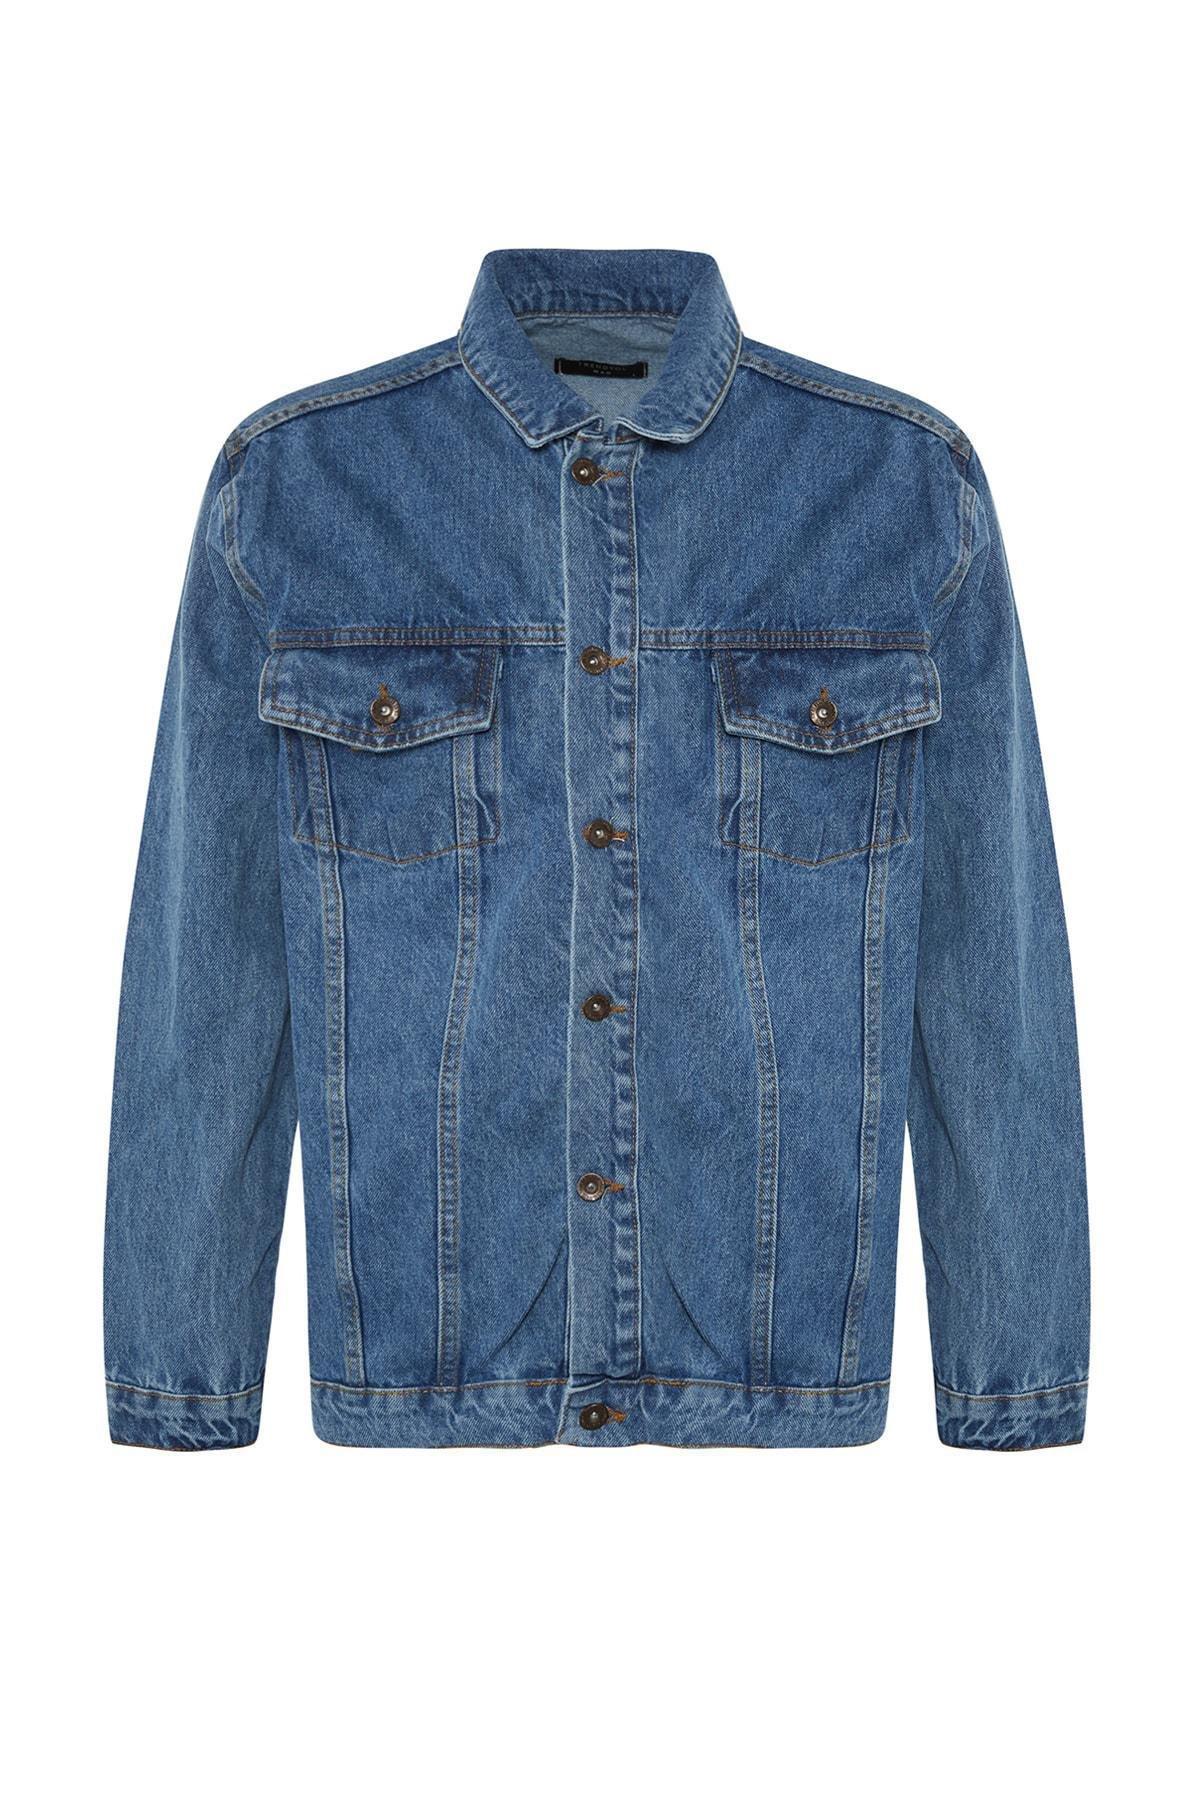 Trendyol - Blue Collared Jacket